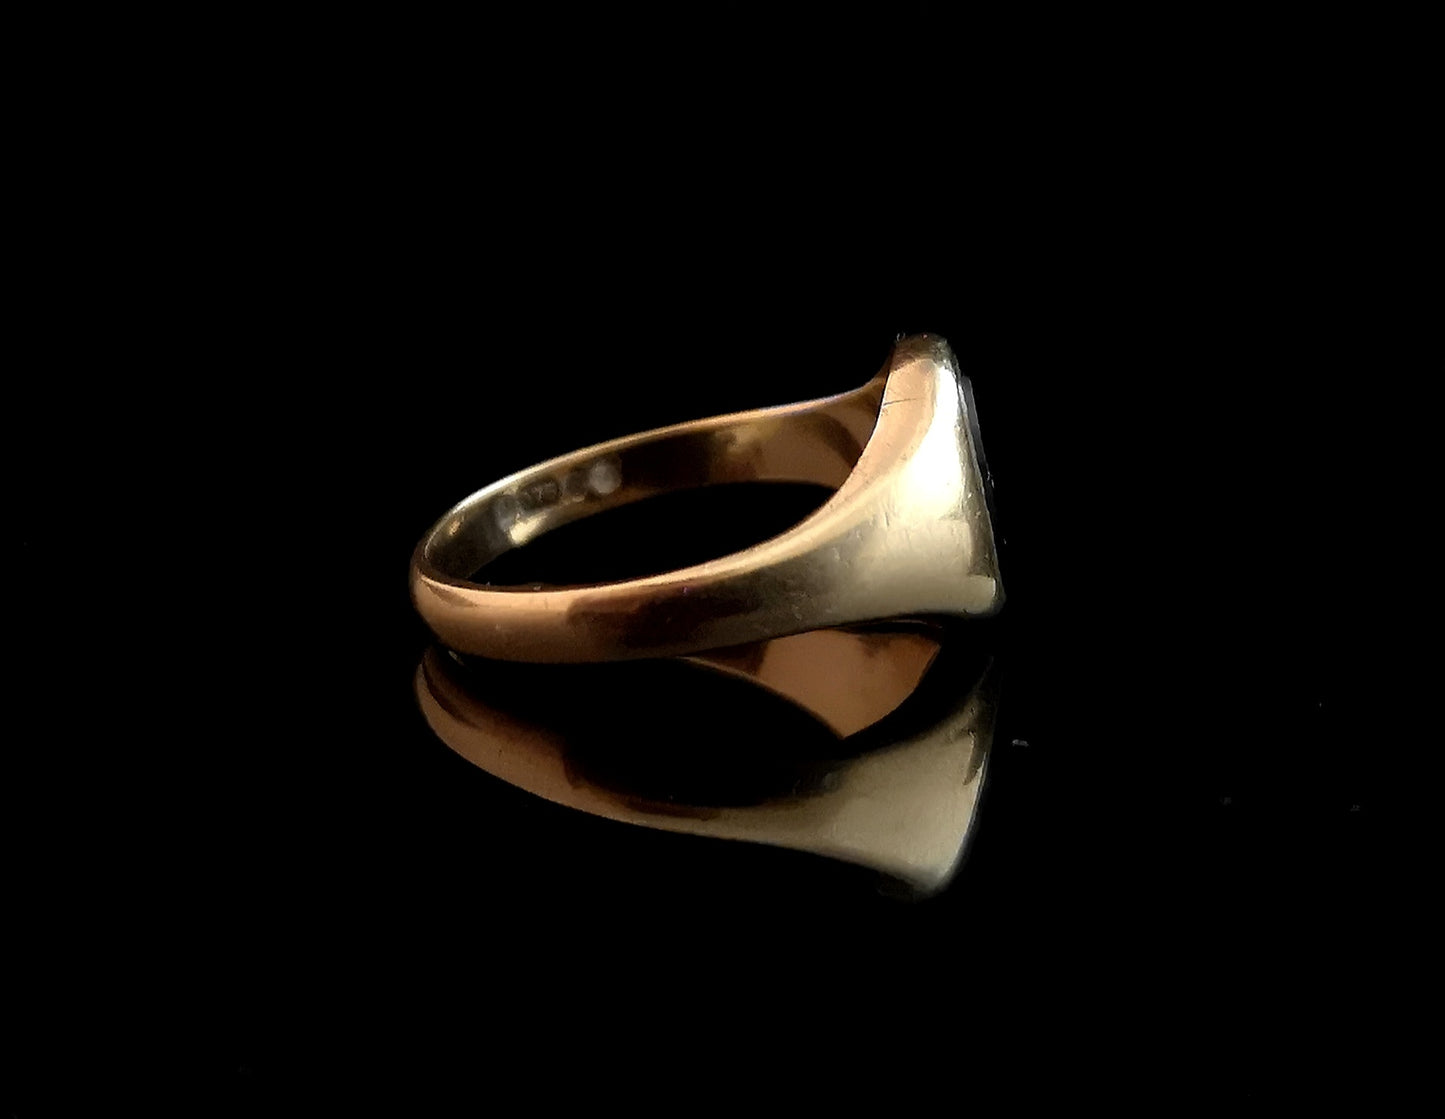 Vintage Onyx signet ring, 9ct gold